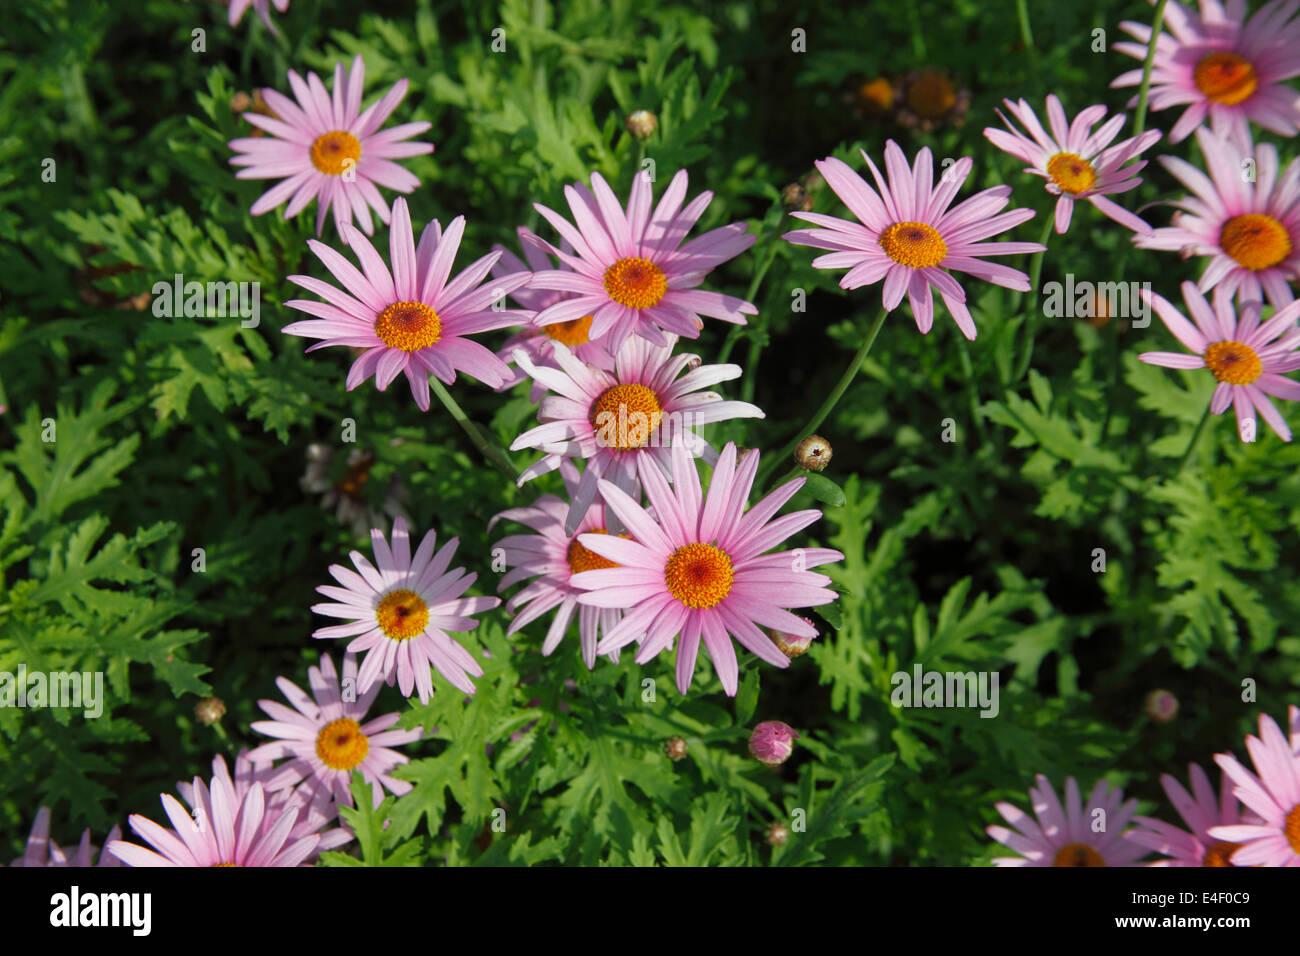 Agryanthemum 'Weymouth Pink' plant in flower Stock Photo